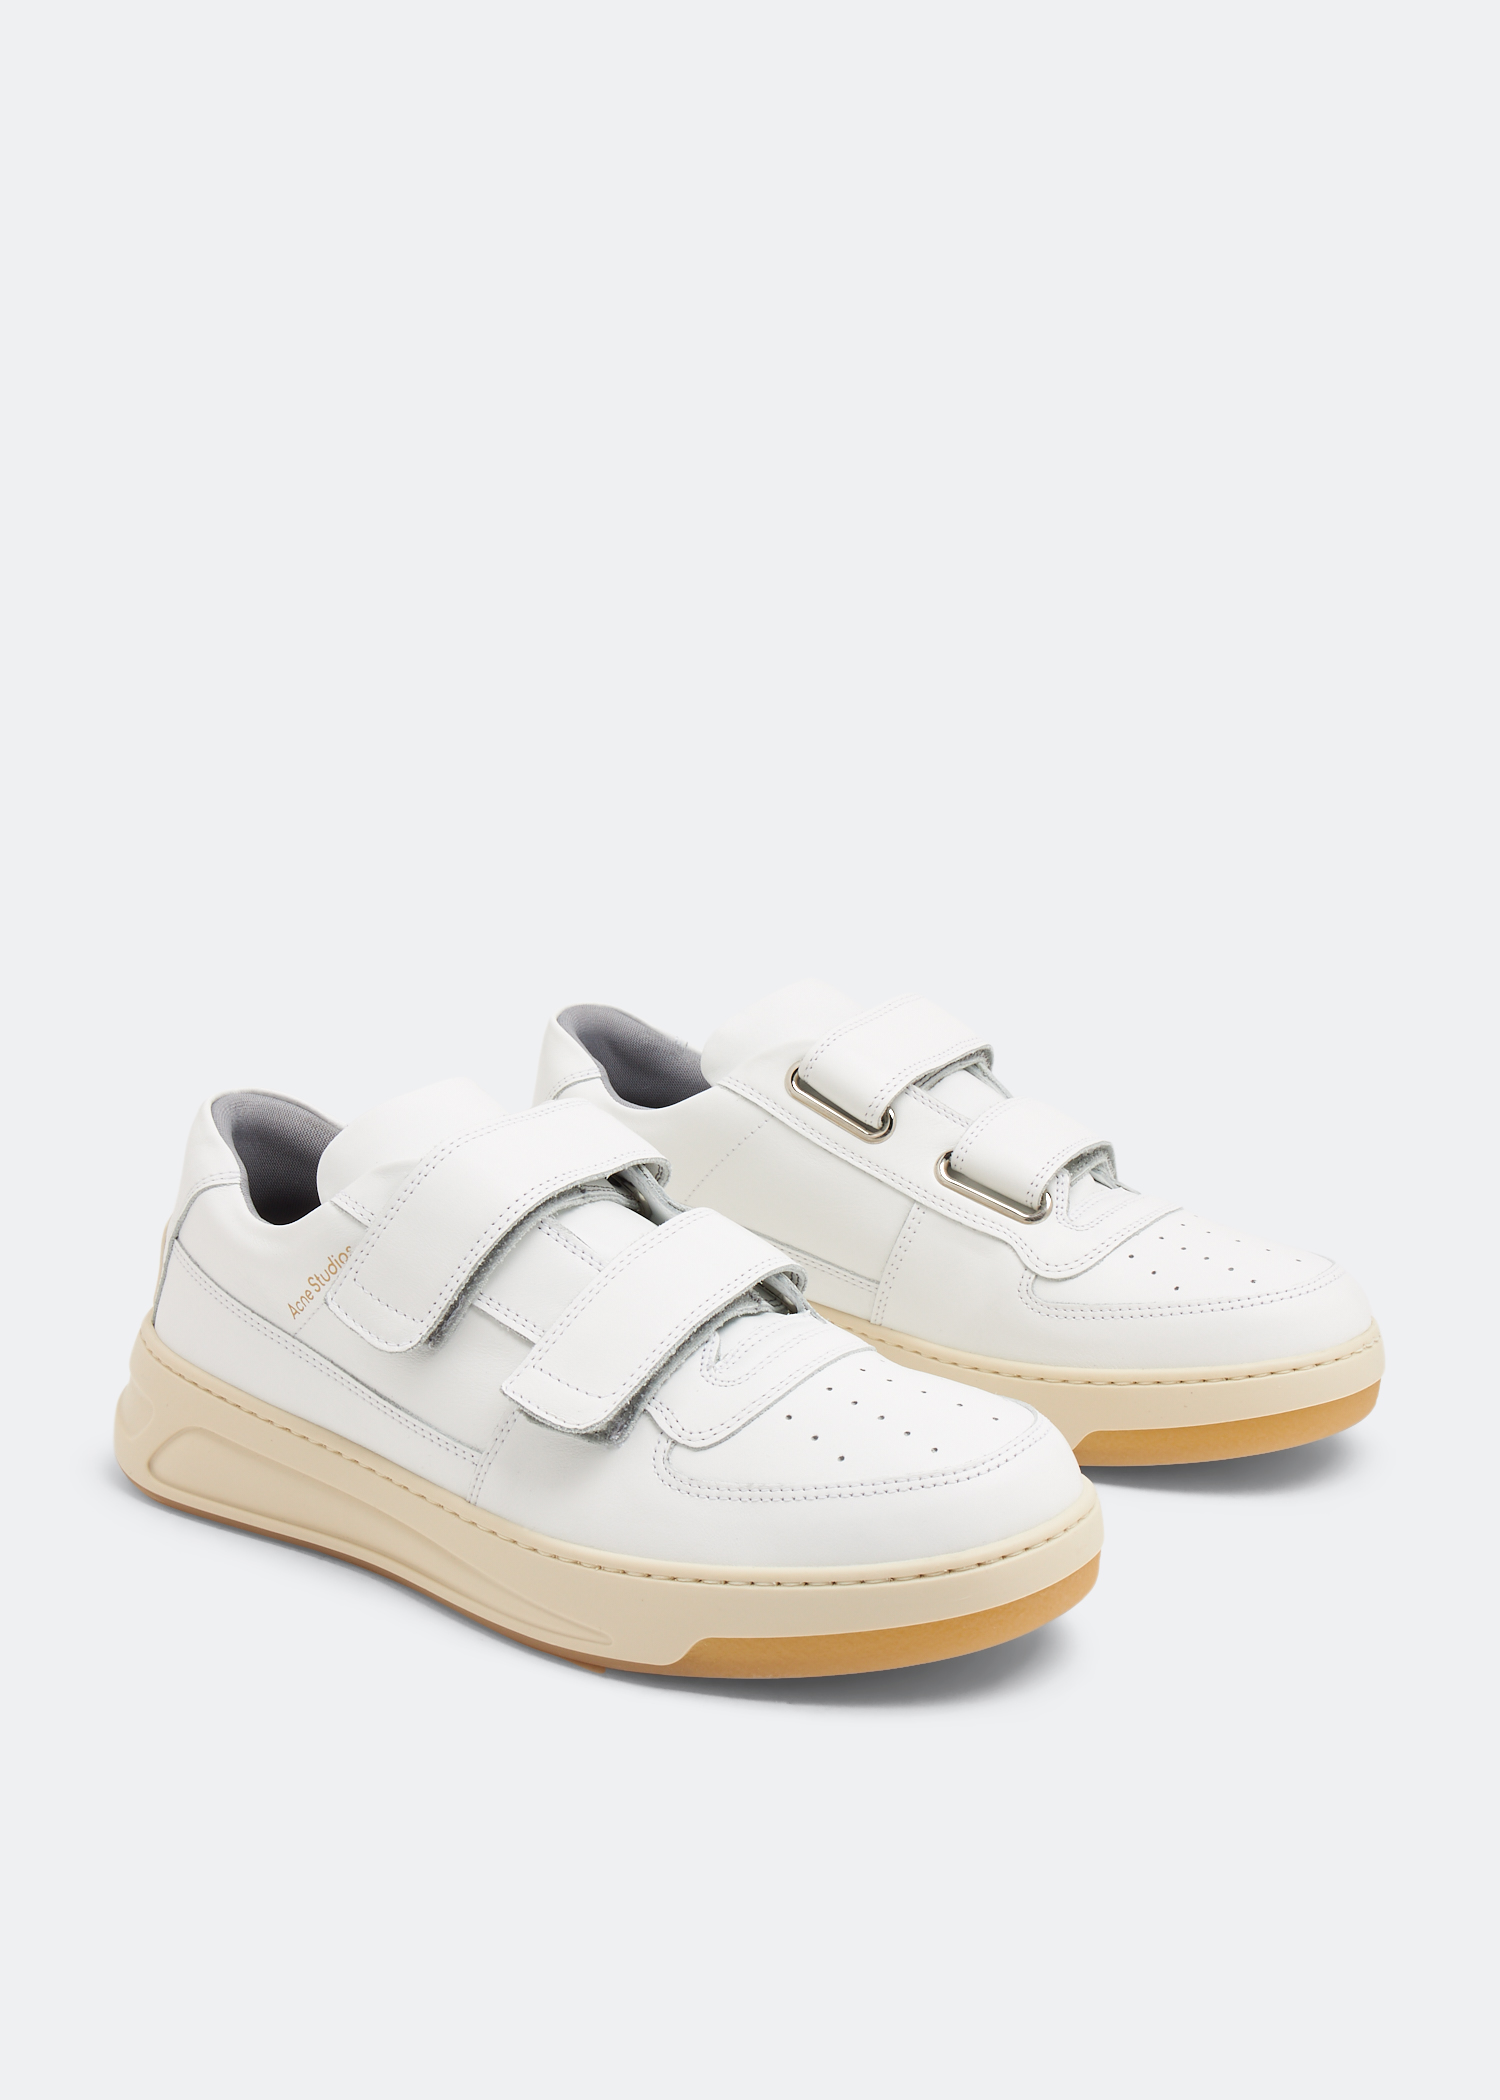 Acne Studios - Velcro strap sneakers - White